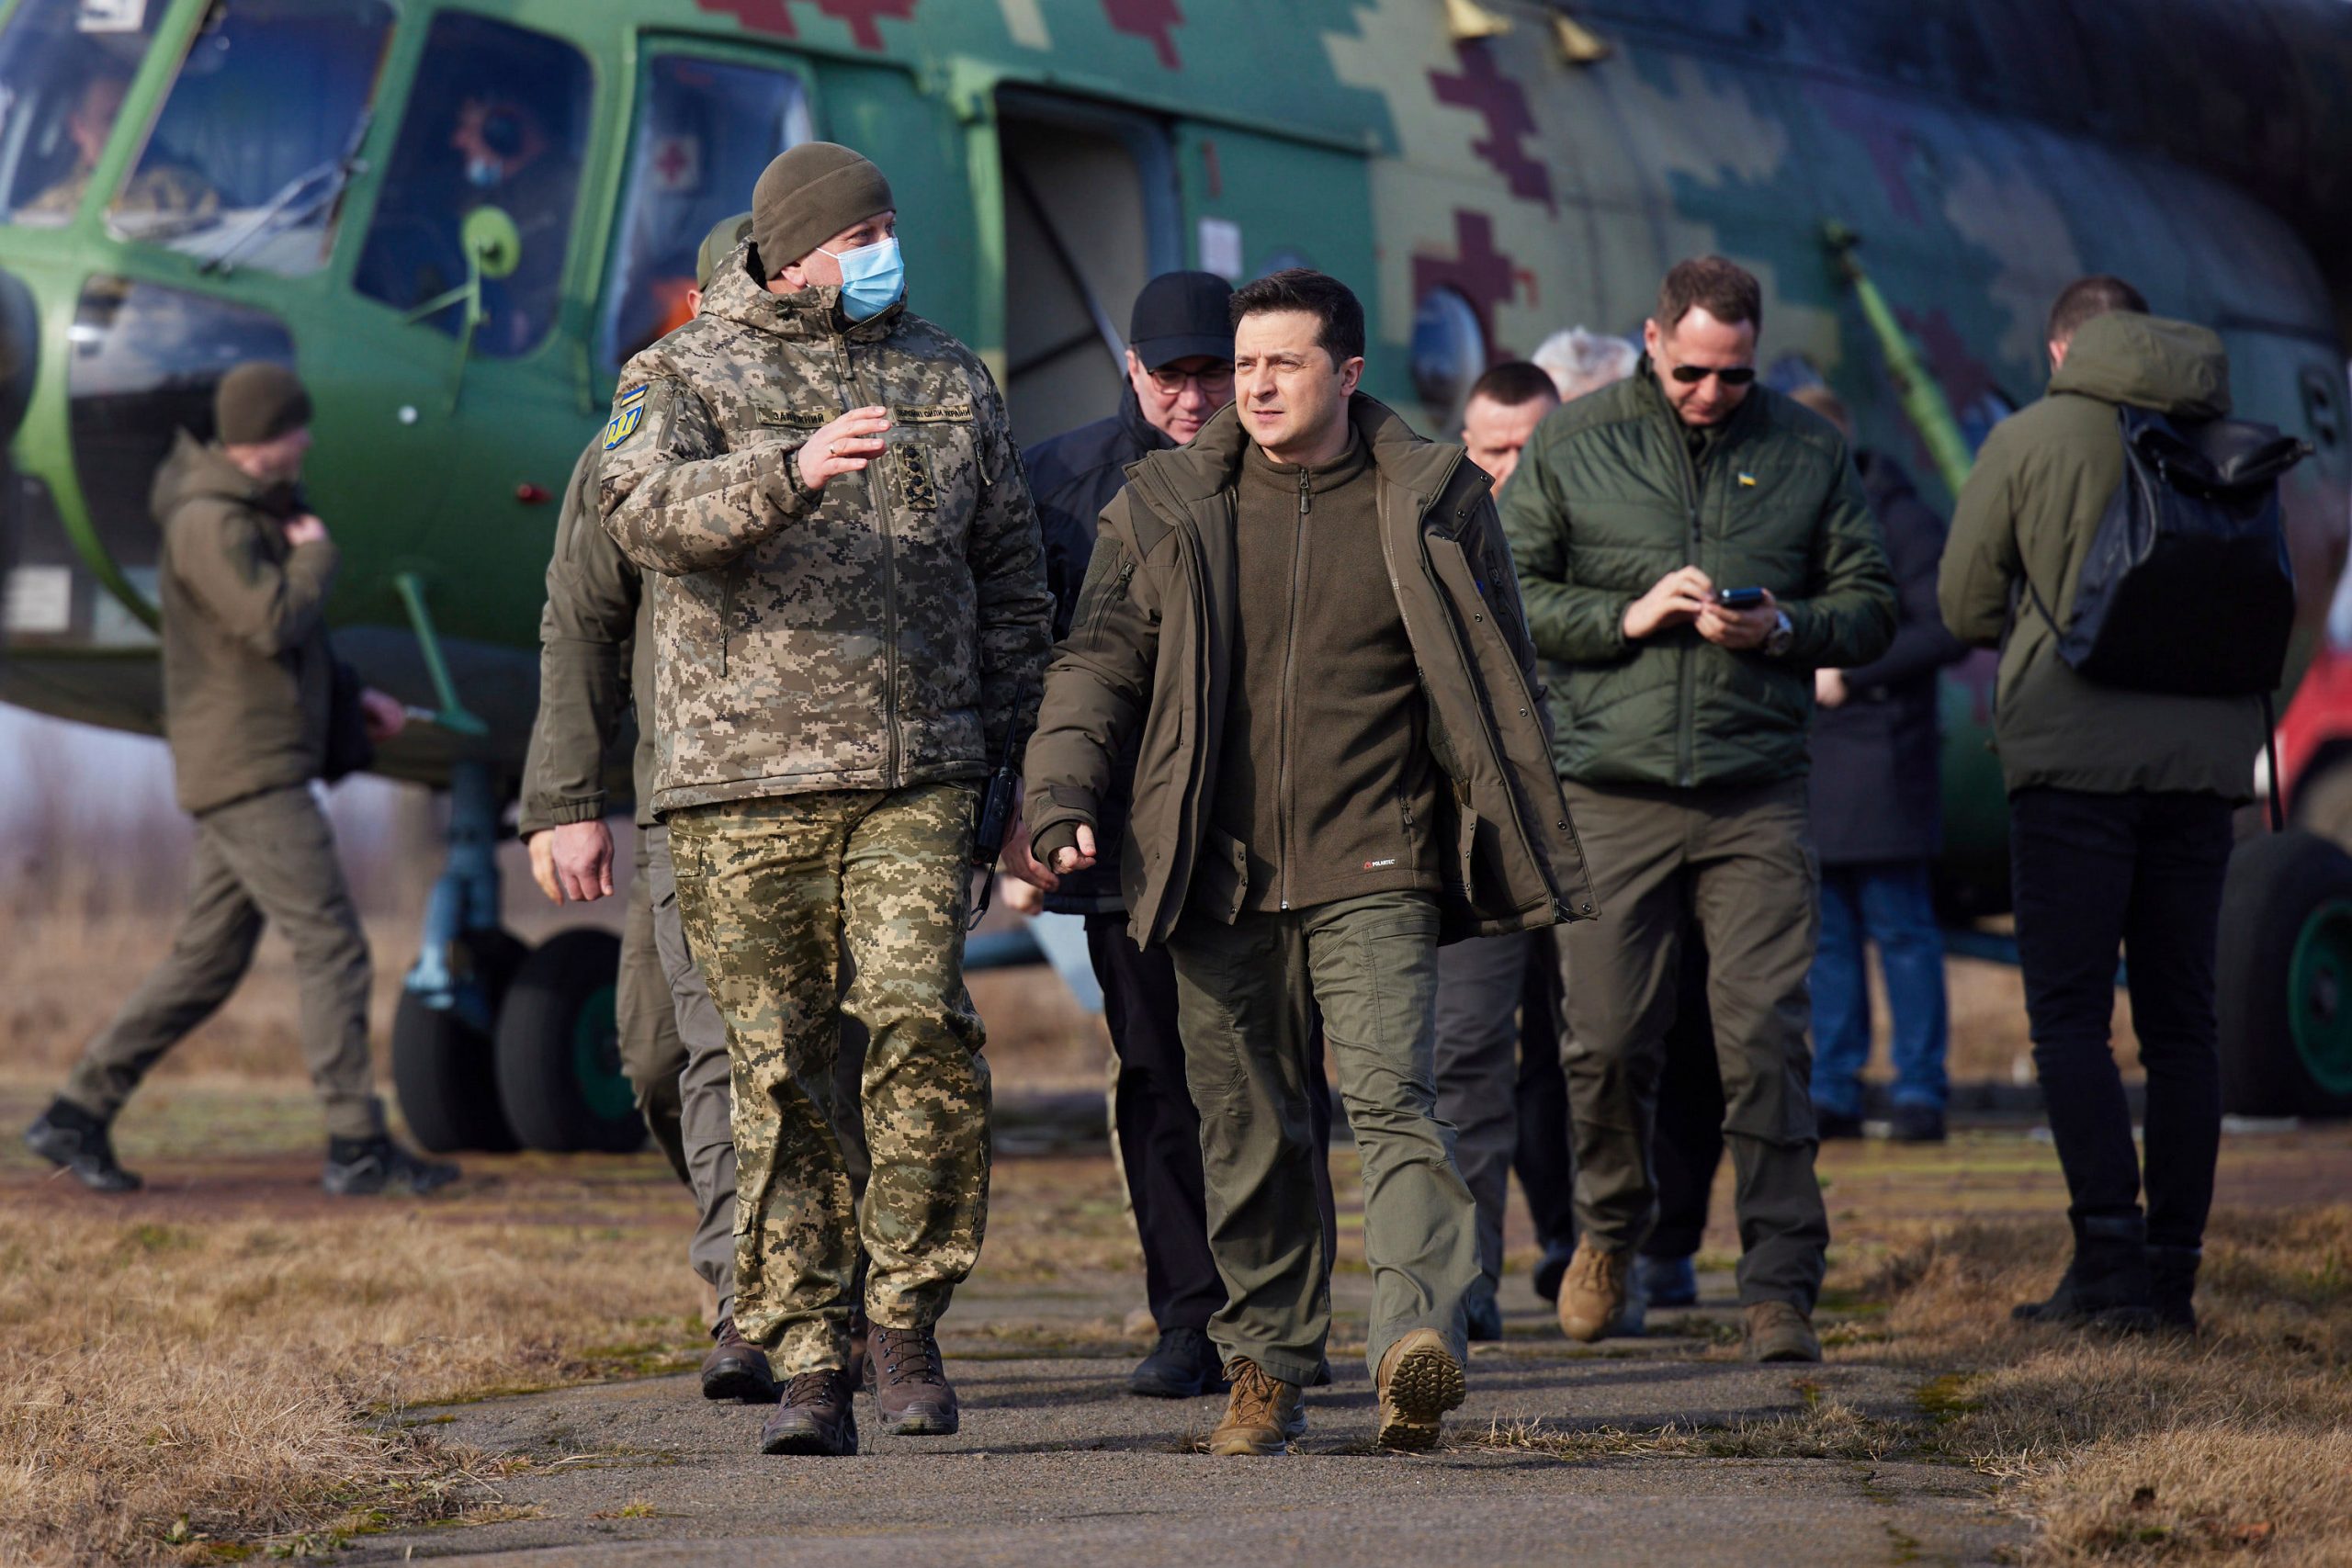 Ukraine President Volodymyr Zelensky warns of Russian ‘sabotage groups’ in Kyiv